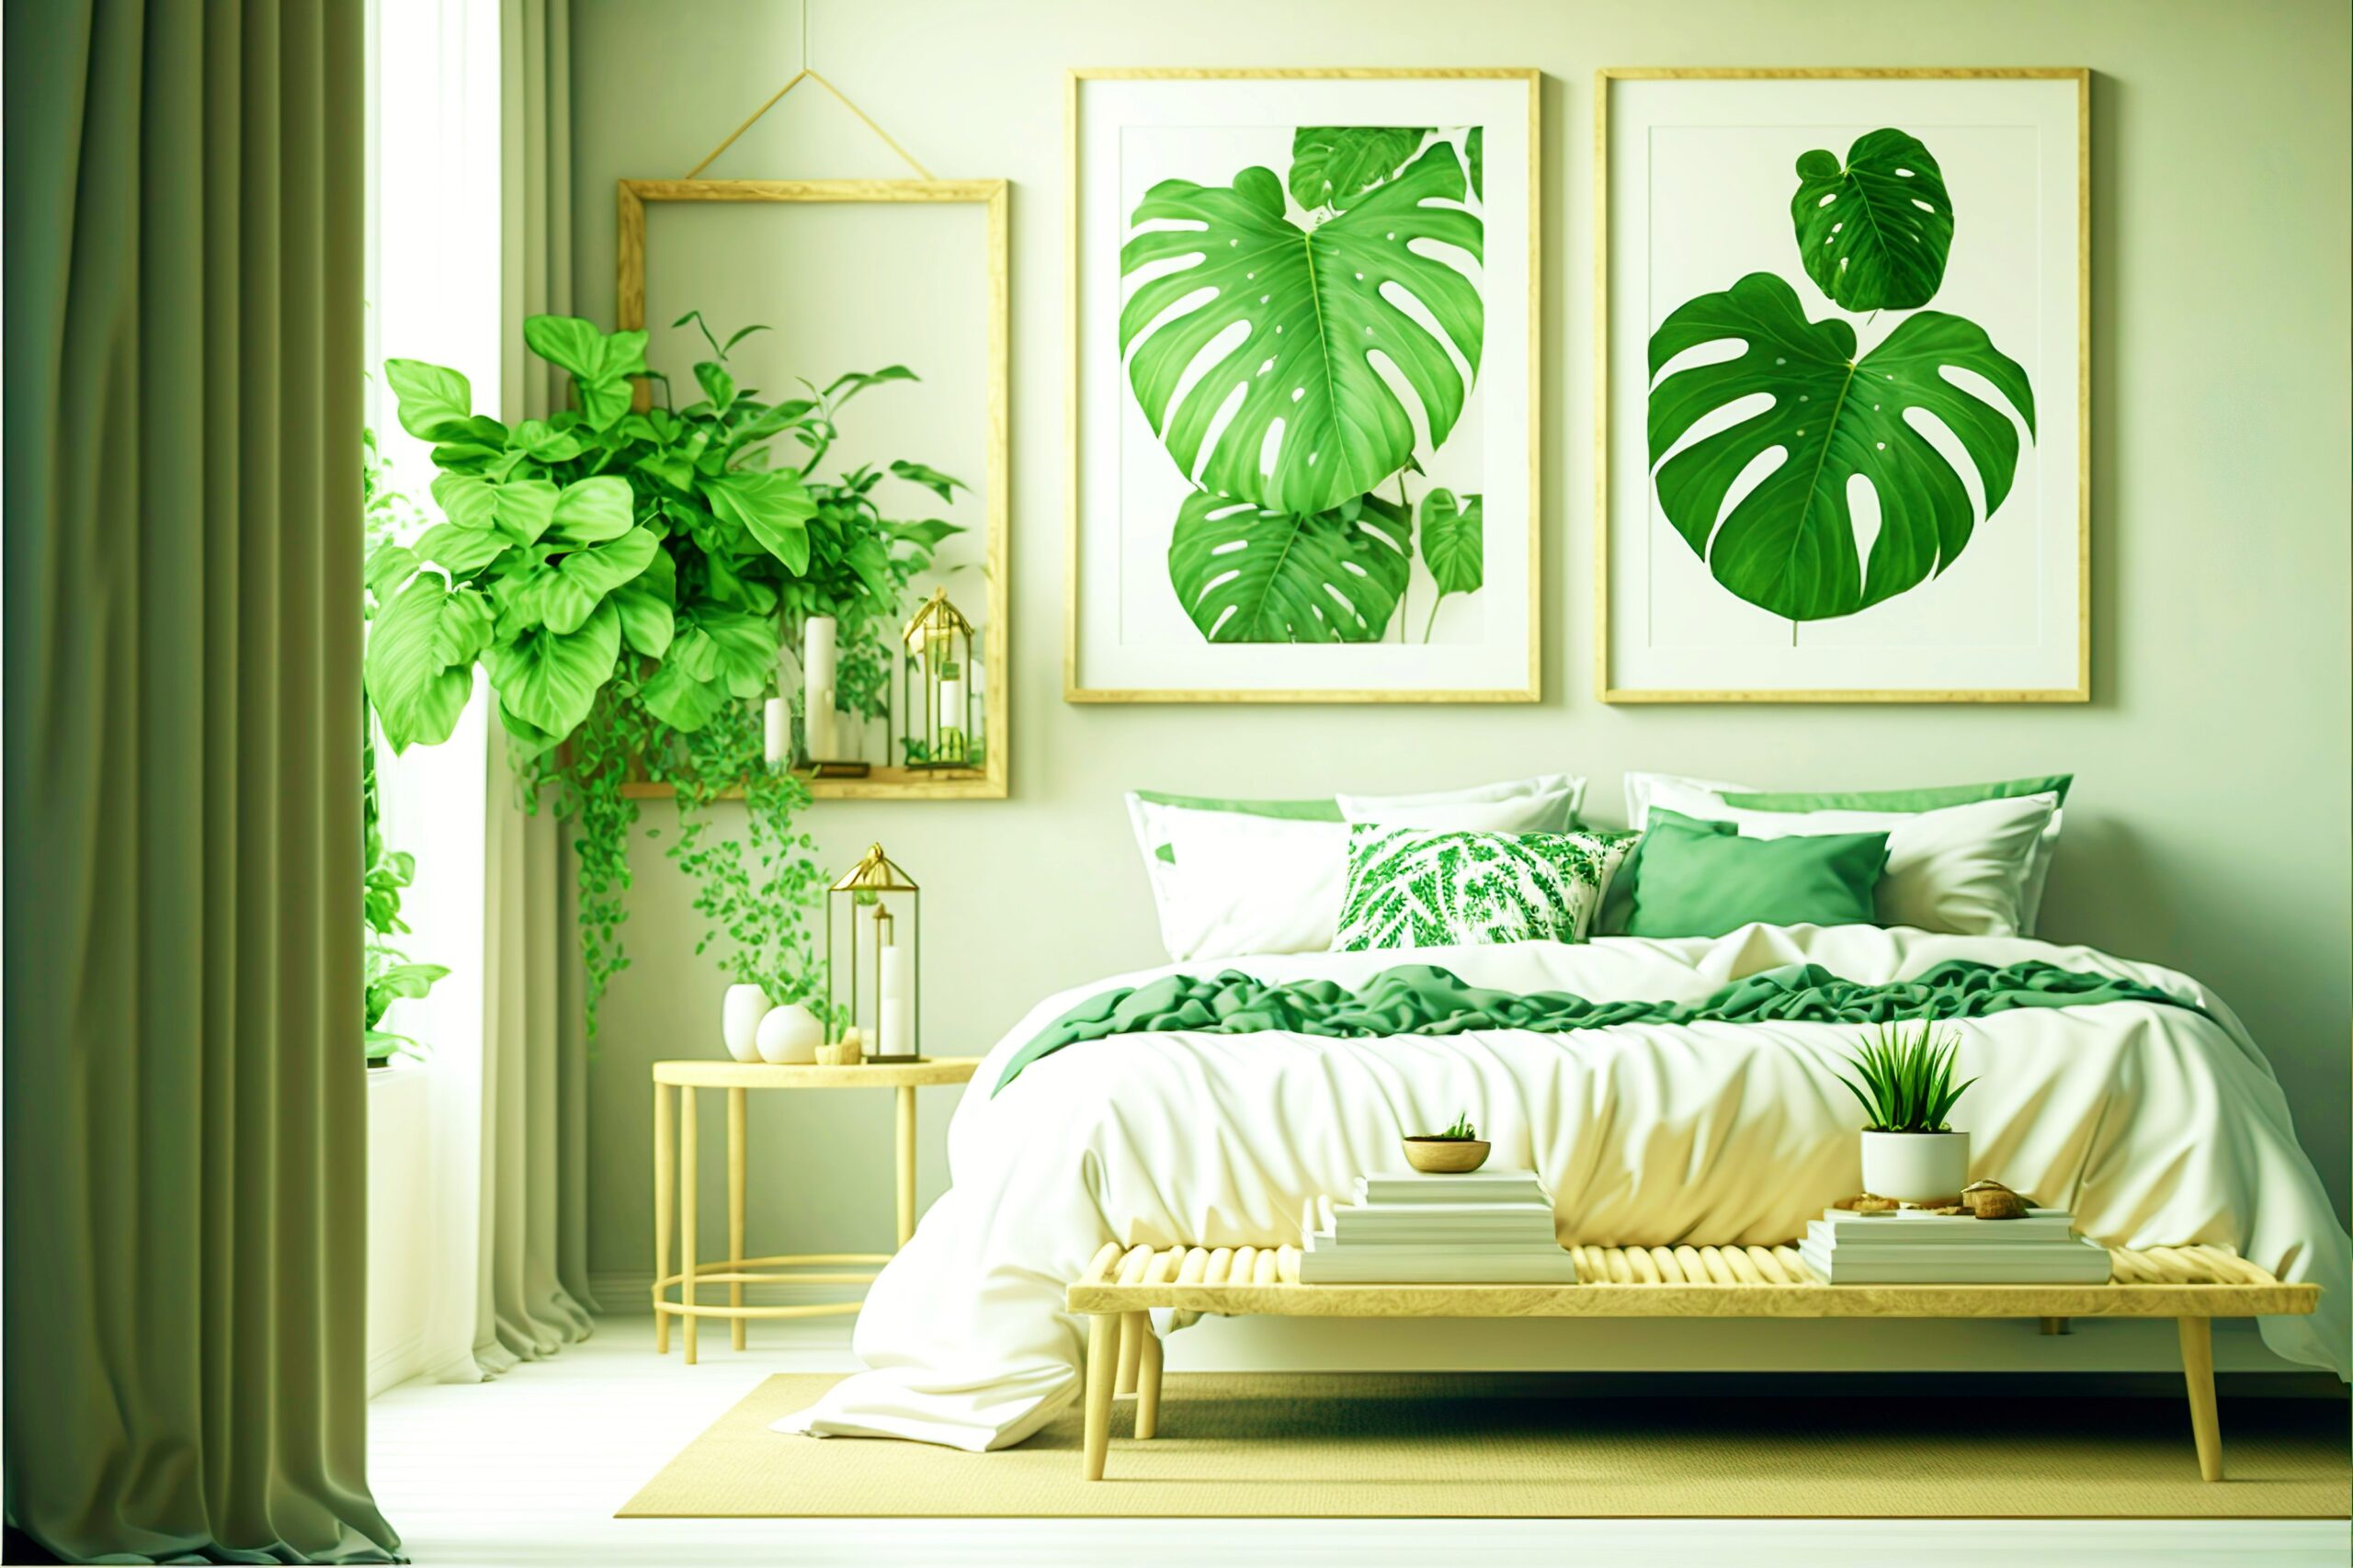 <img src="plant.jpg" alt="plant themed budget friendly bedroom"/>